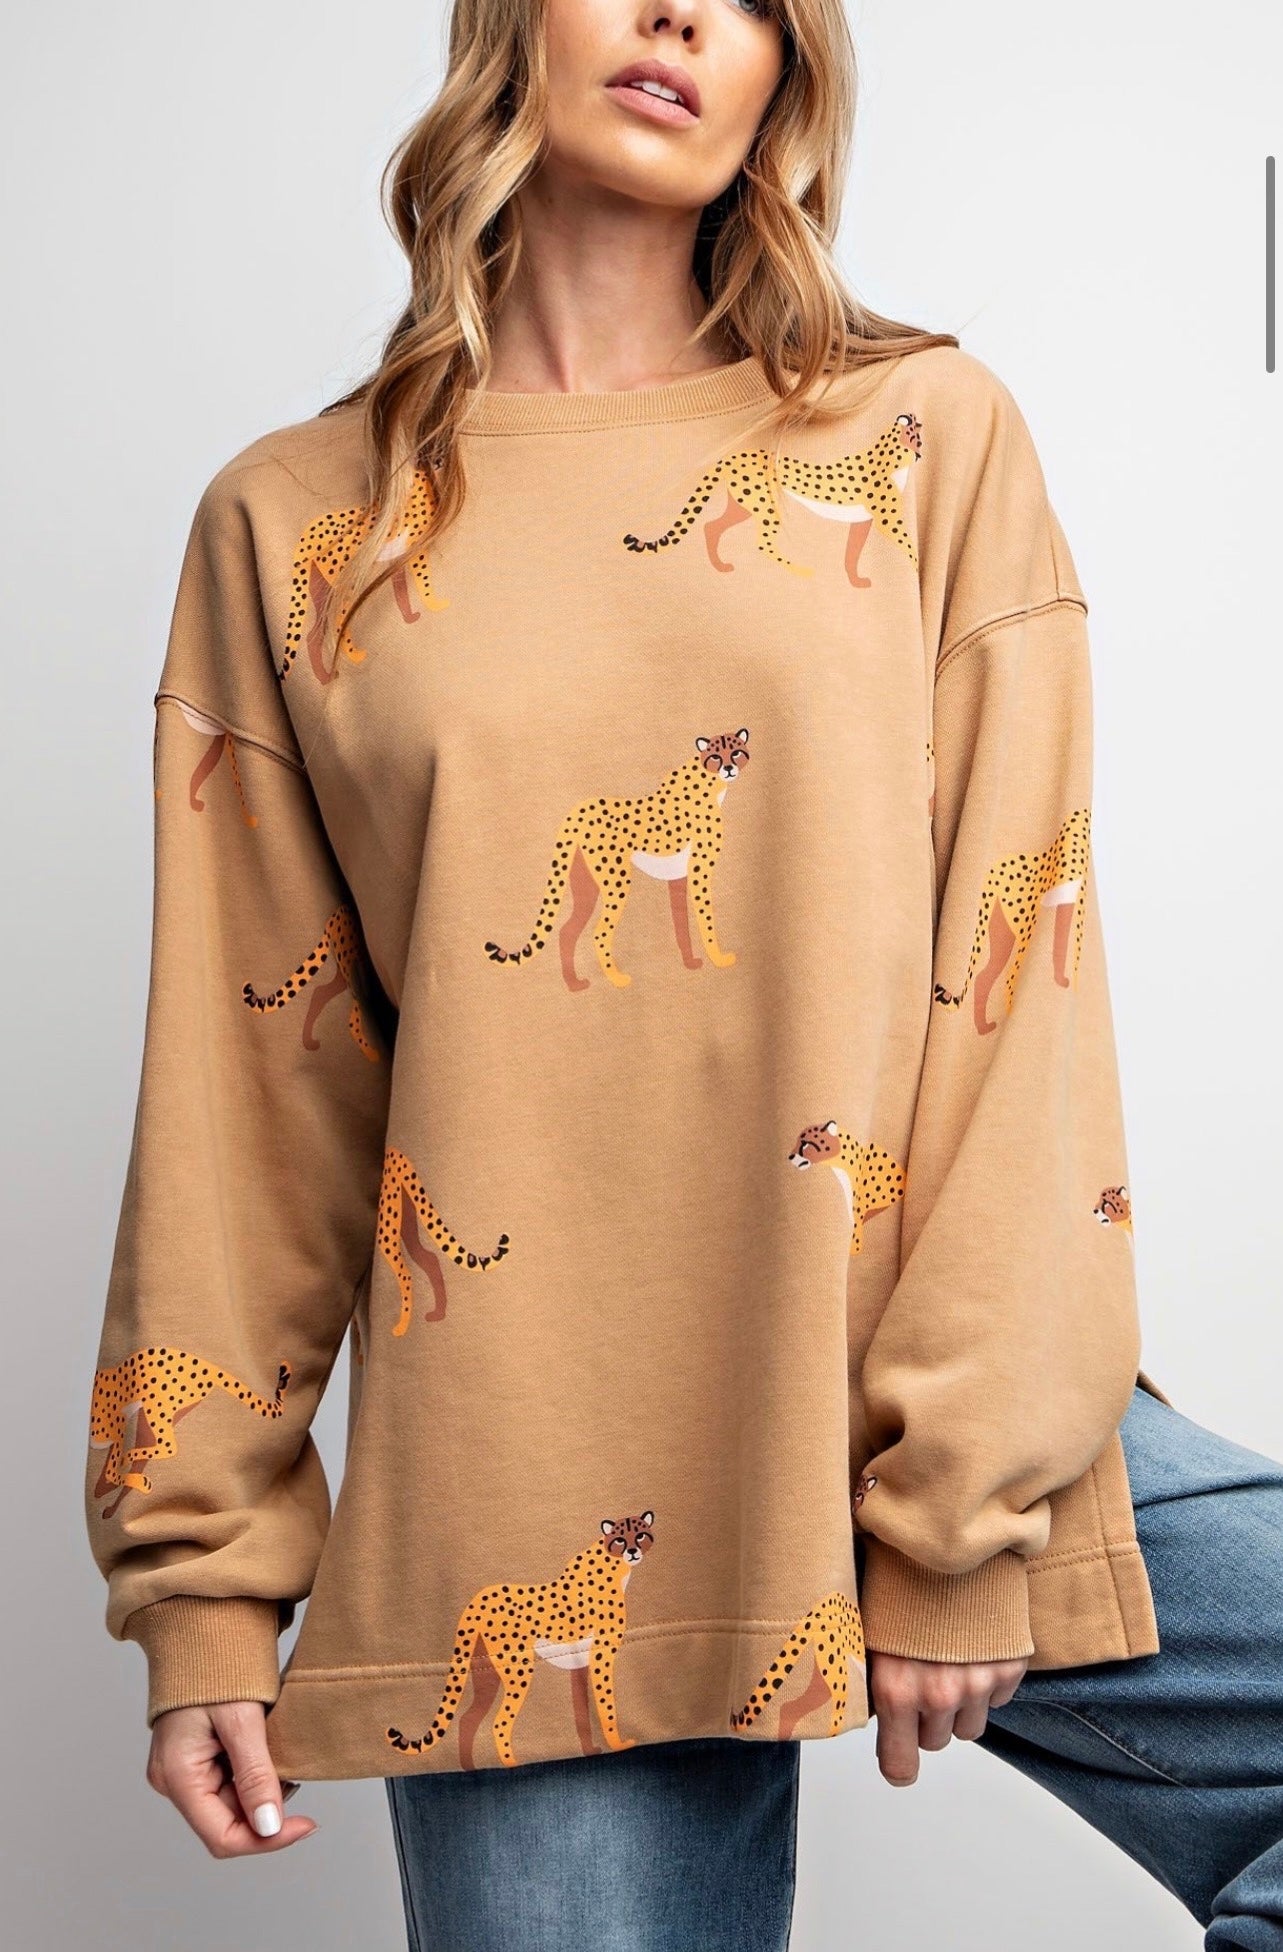 Easel mineral wash cheetah print sweatshirt